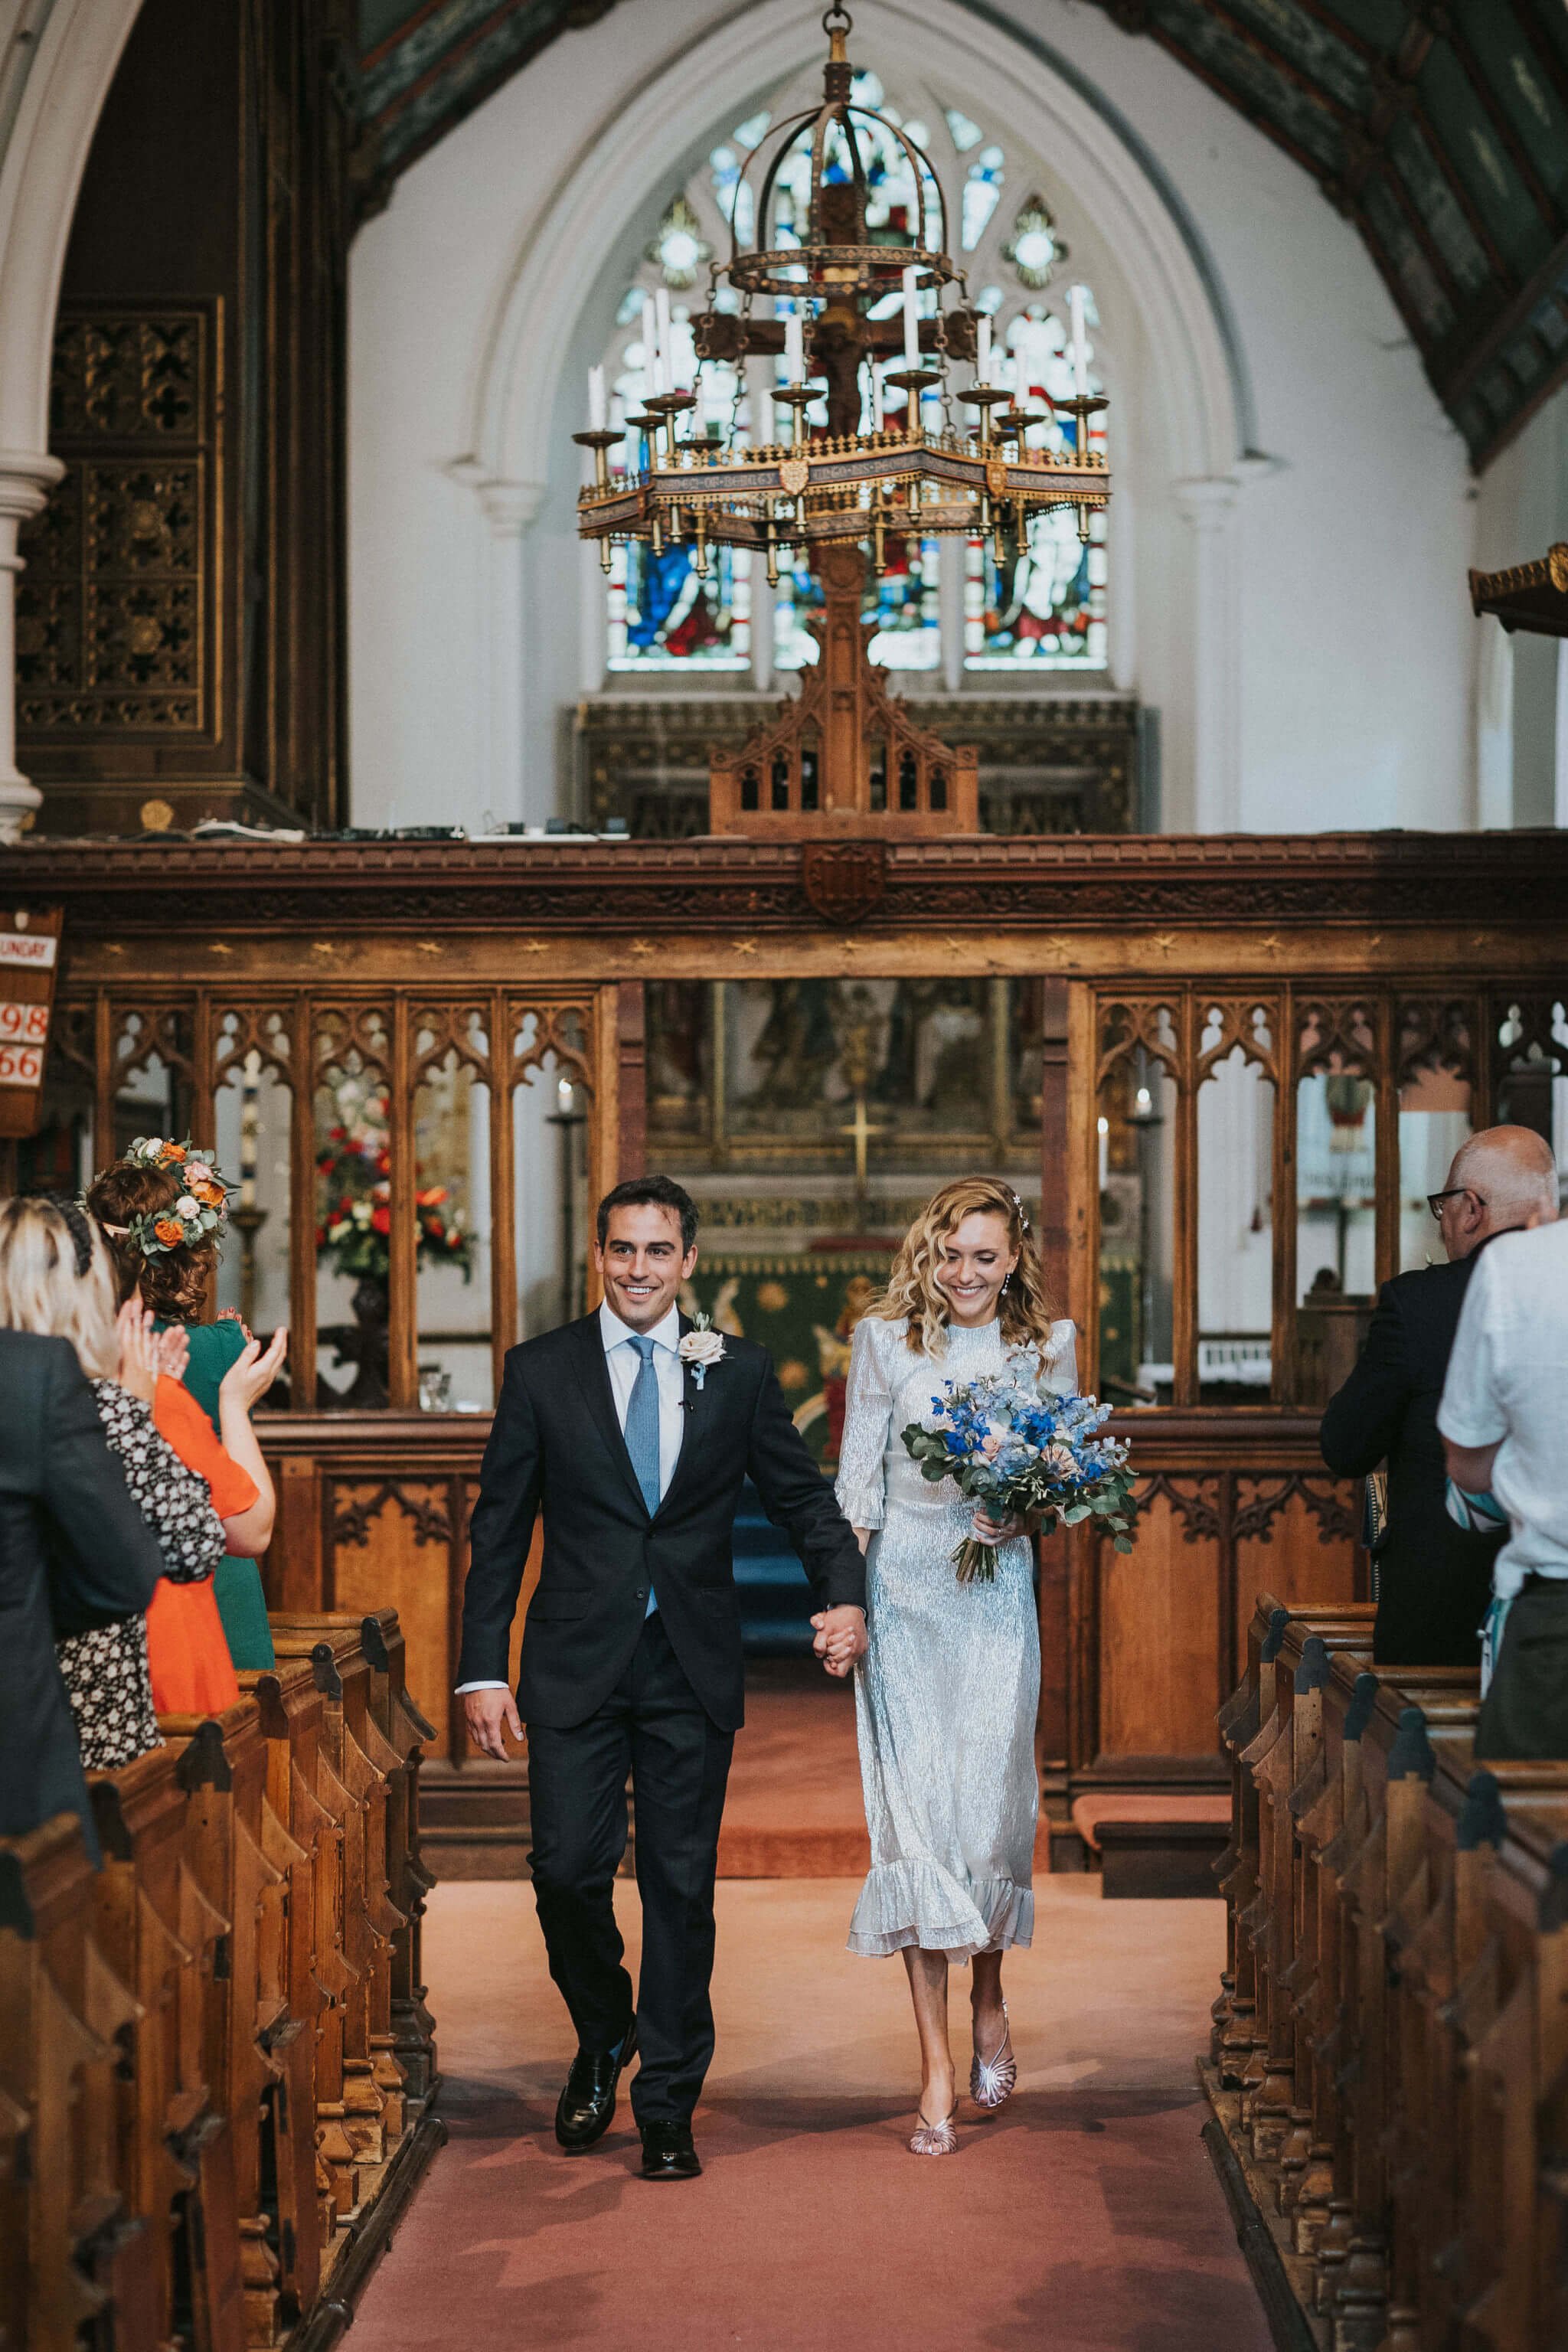 Wedding-church-exit-groom-buttonhole-bride-bouquet.jpg